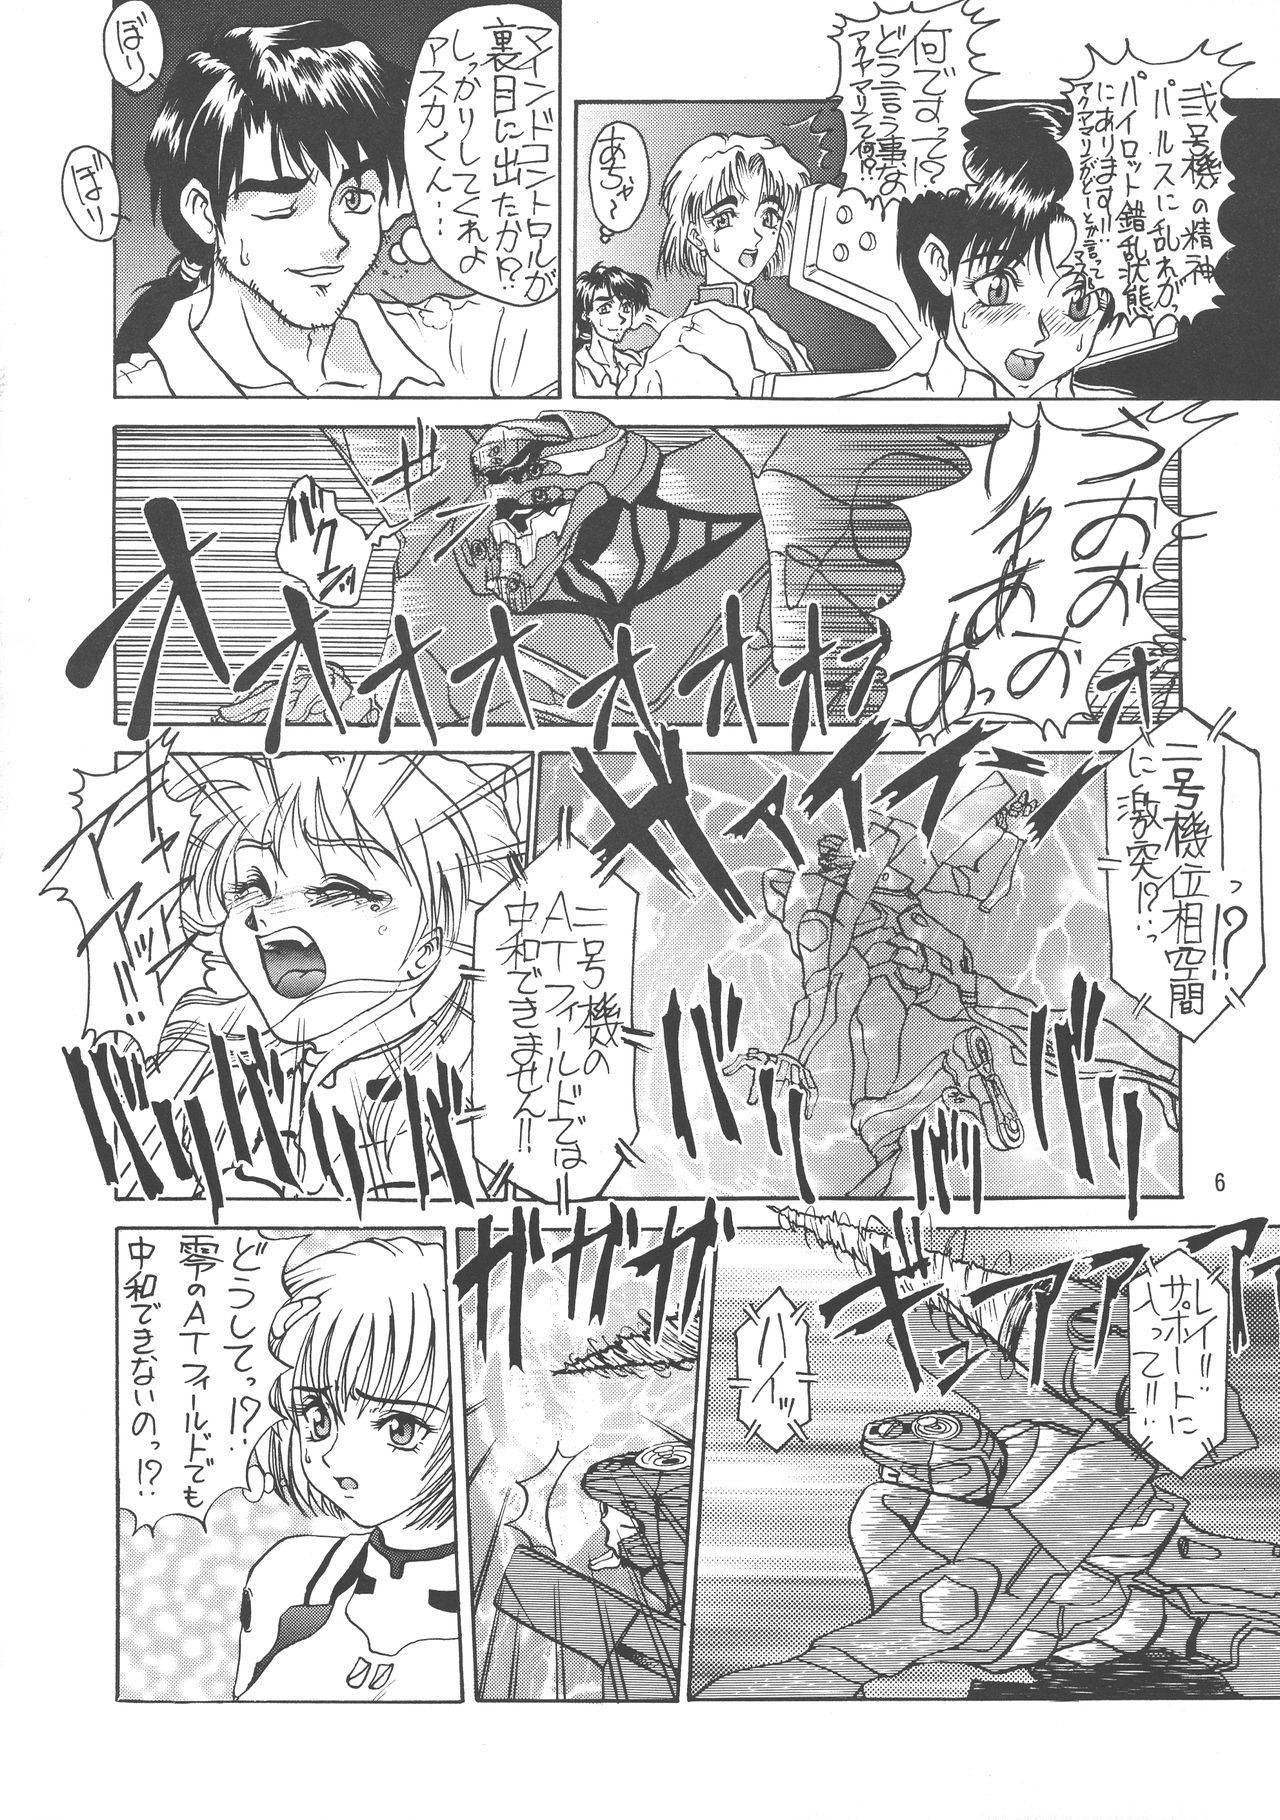 Tit Kuro no Kioku Ni - Neon genesis evangelion Street fighter Berserk X-men Ikillitts - Page 6